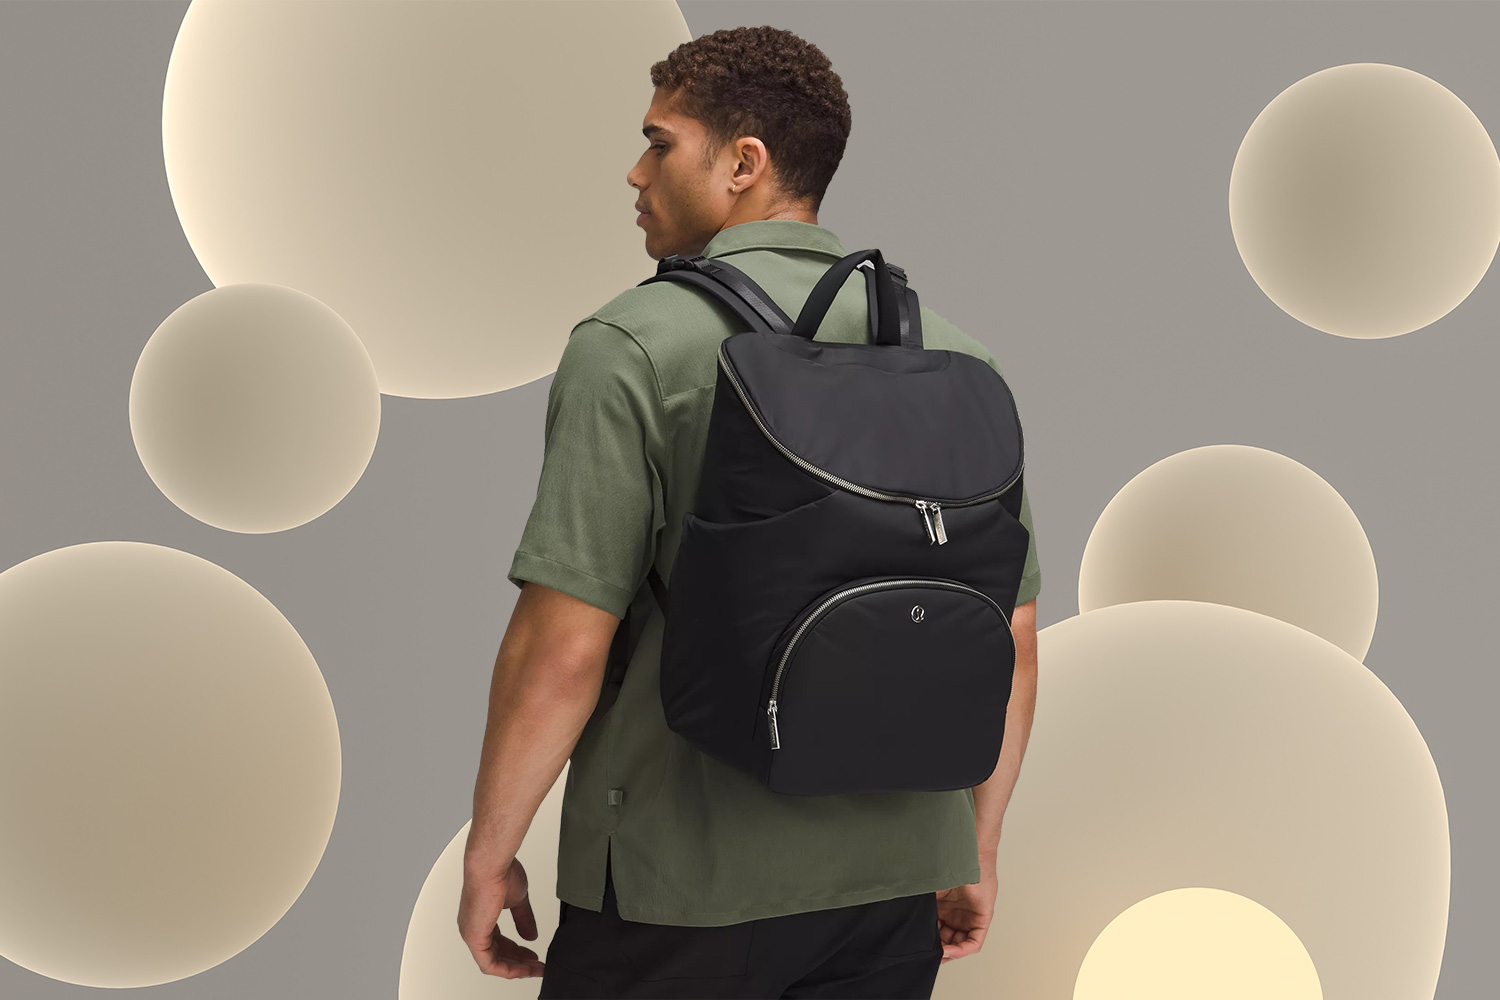 Lululemon New Parent Backpack Review: Diaper Bag, Rebranded - InsideHook